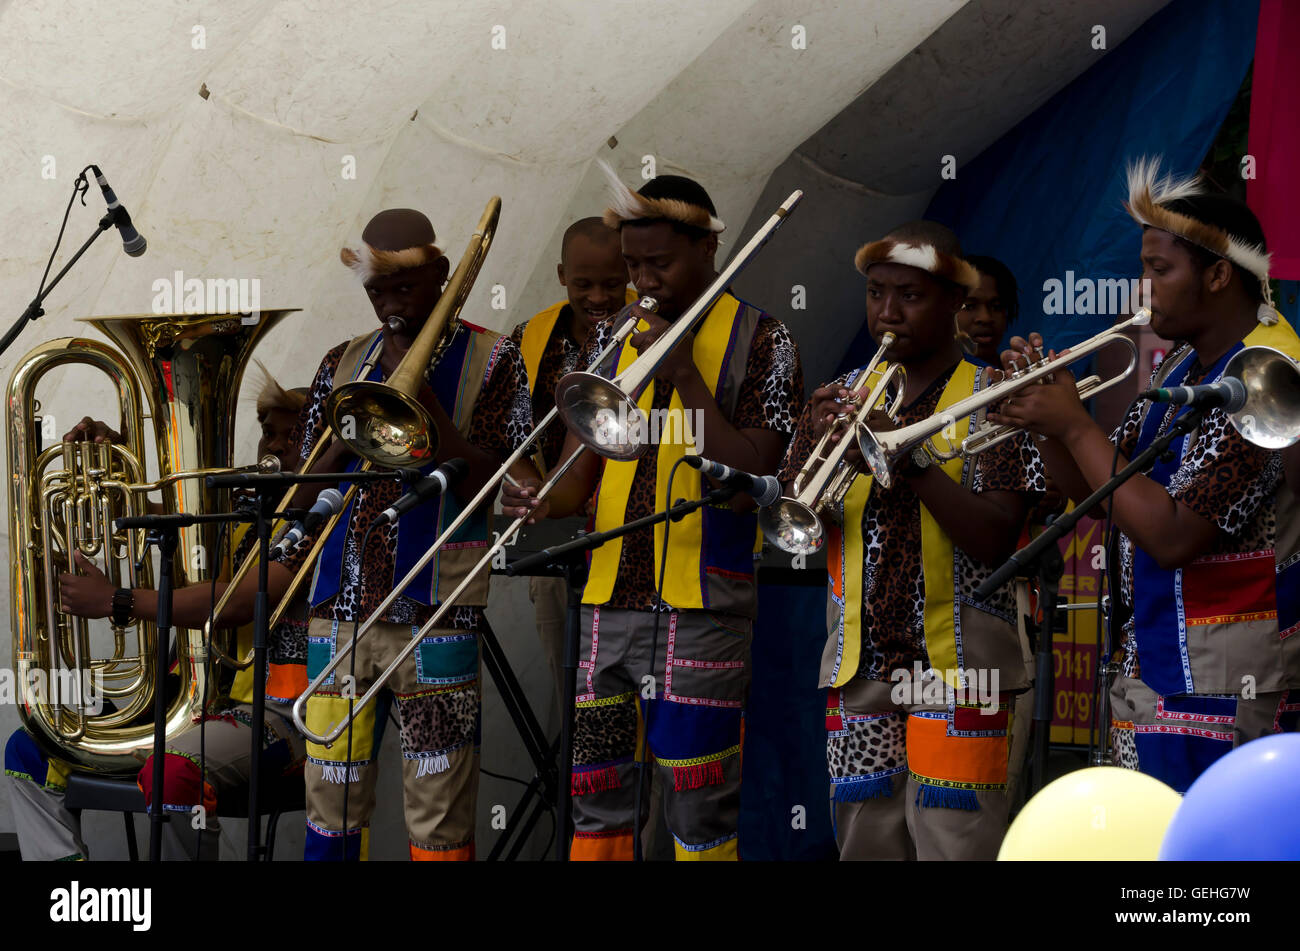 The Durban Music School band performing at the Mardi Gras, part of the Edinburgh Jazz Festival. Stock Photo